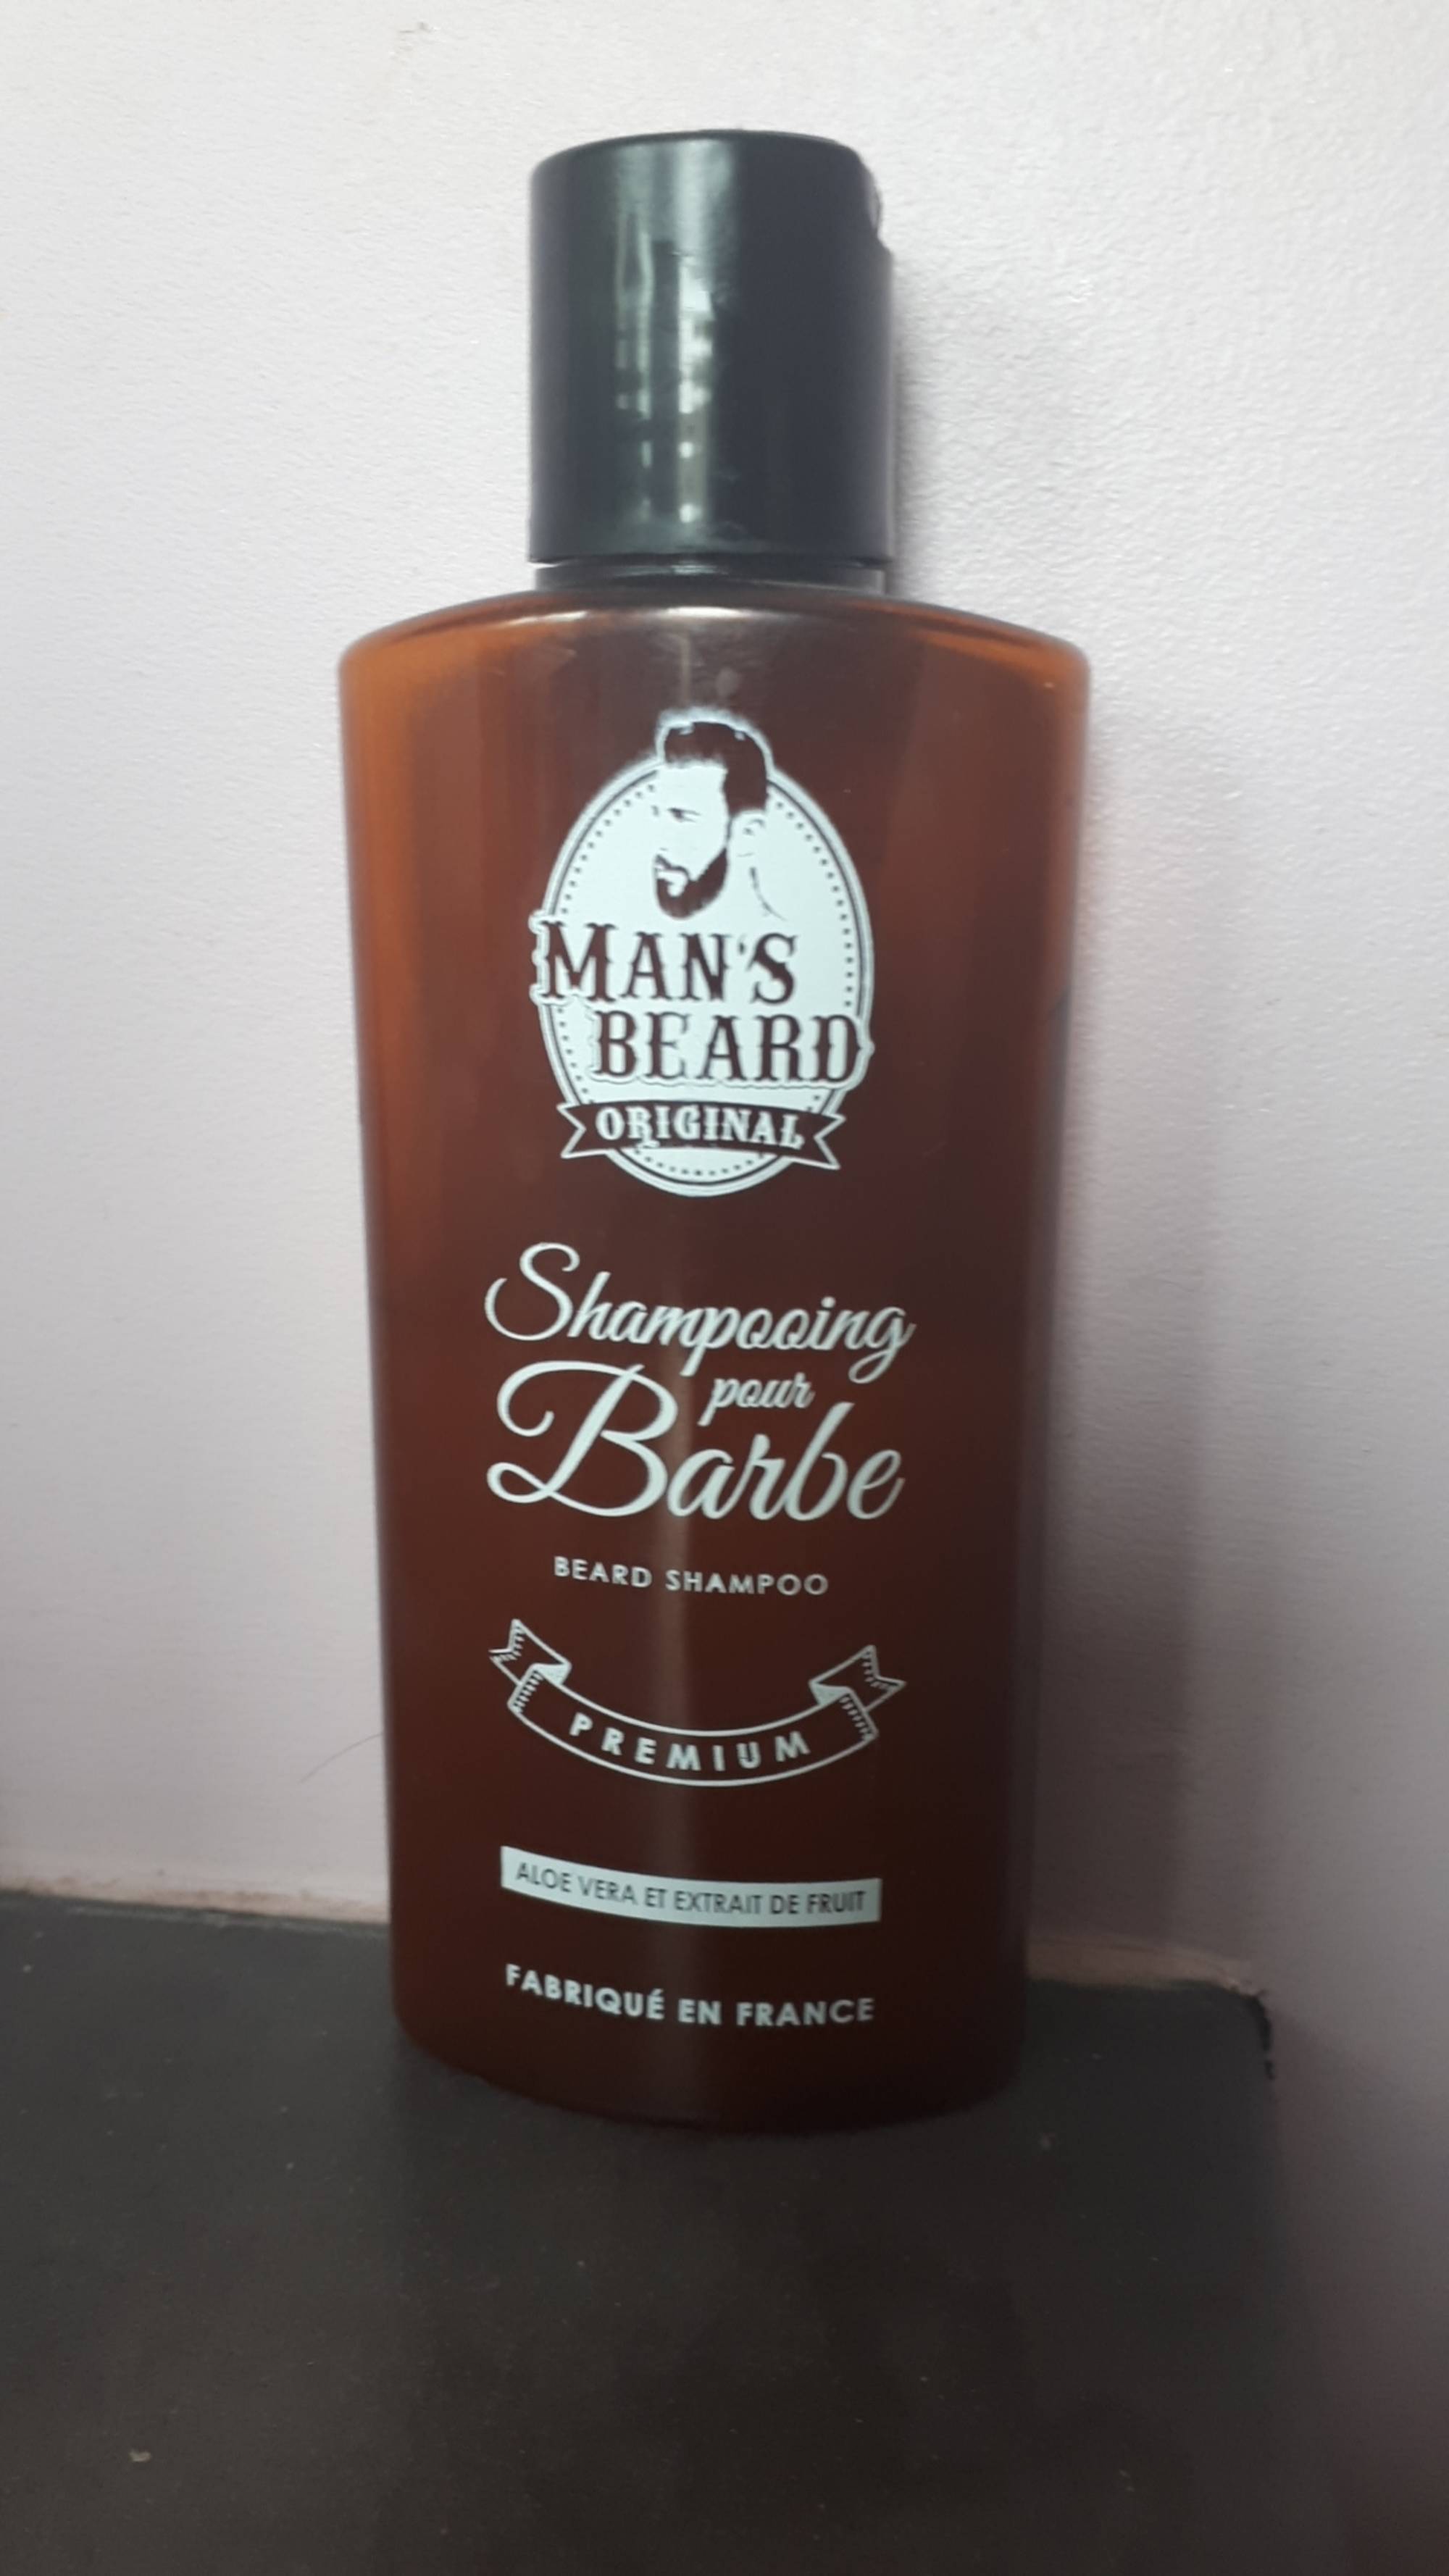 MAN'S BEARD - Shampooing pour barbe